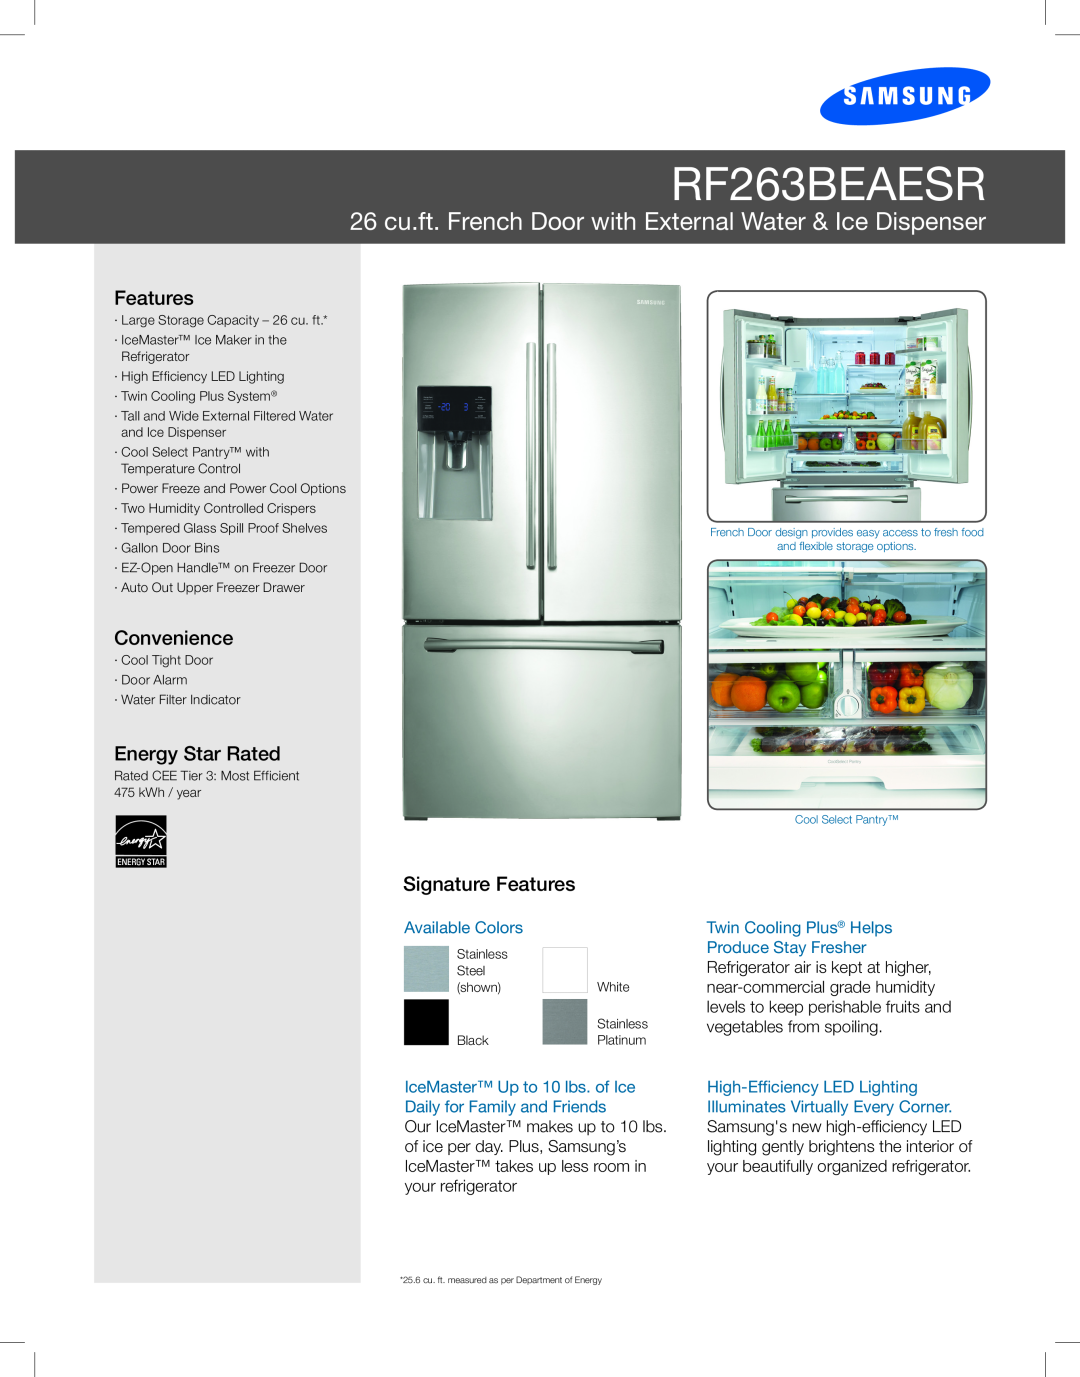 Samsung RF263BEAEBC user manual Refrigerator, imagine the possibilities, Samsung, Free Standing Appliance, English 